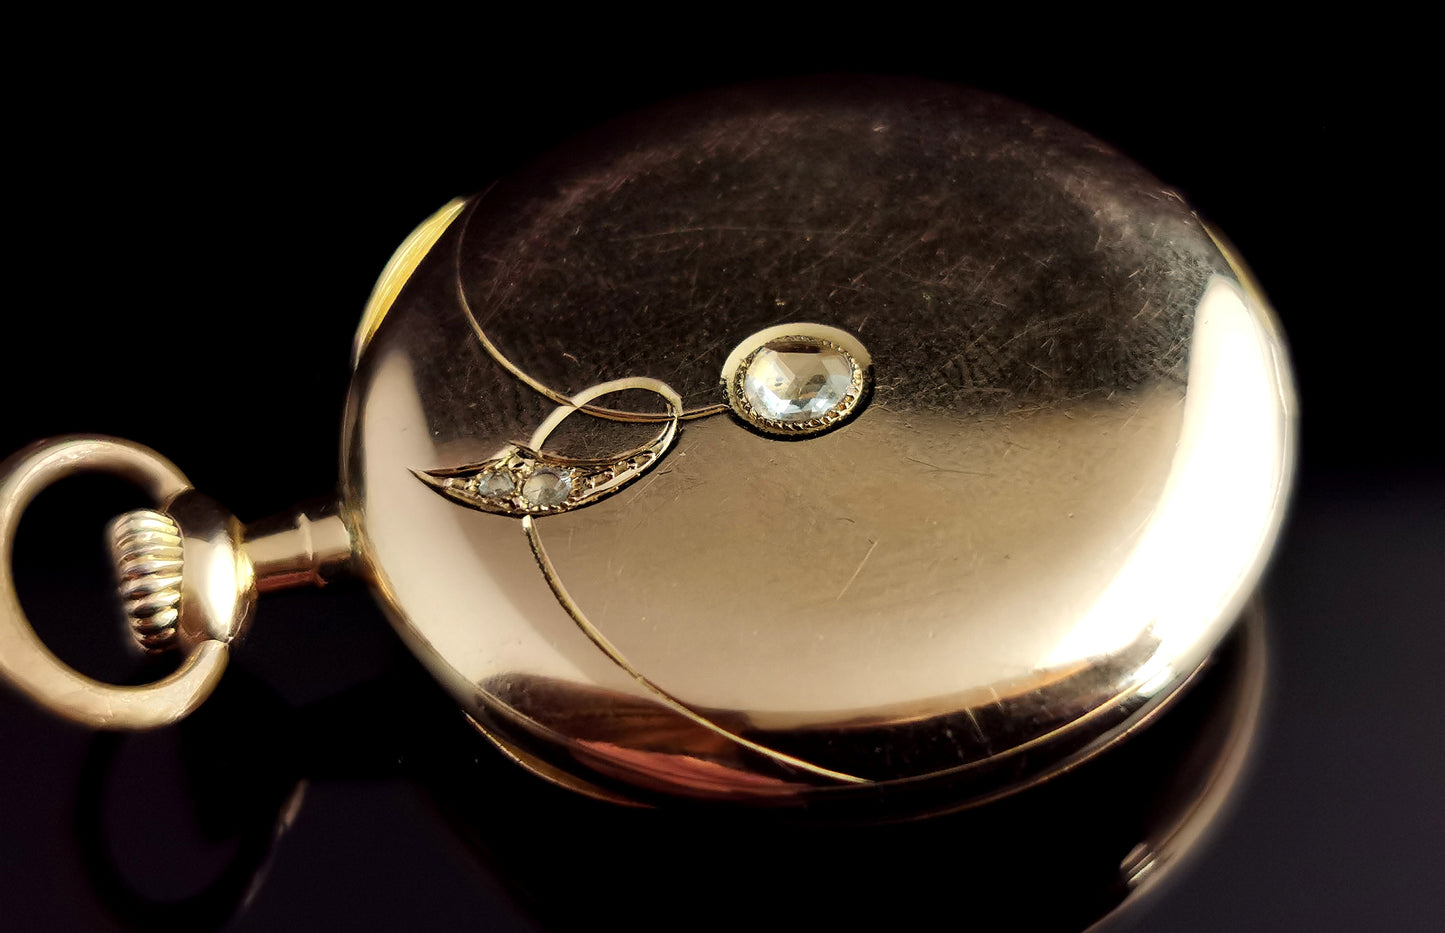 Antique 18ct gold pocket watch, Rose cut diamond, Art Nouveau, fob watch